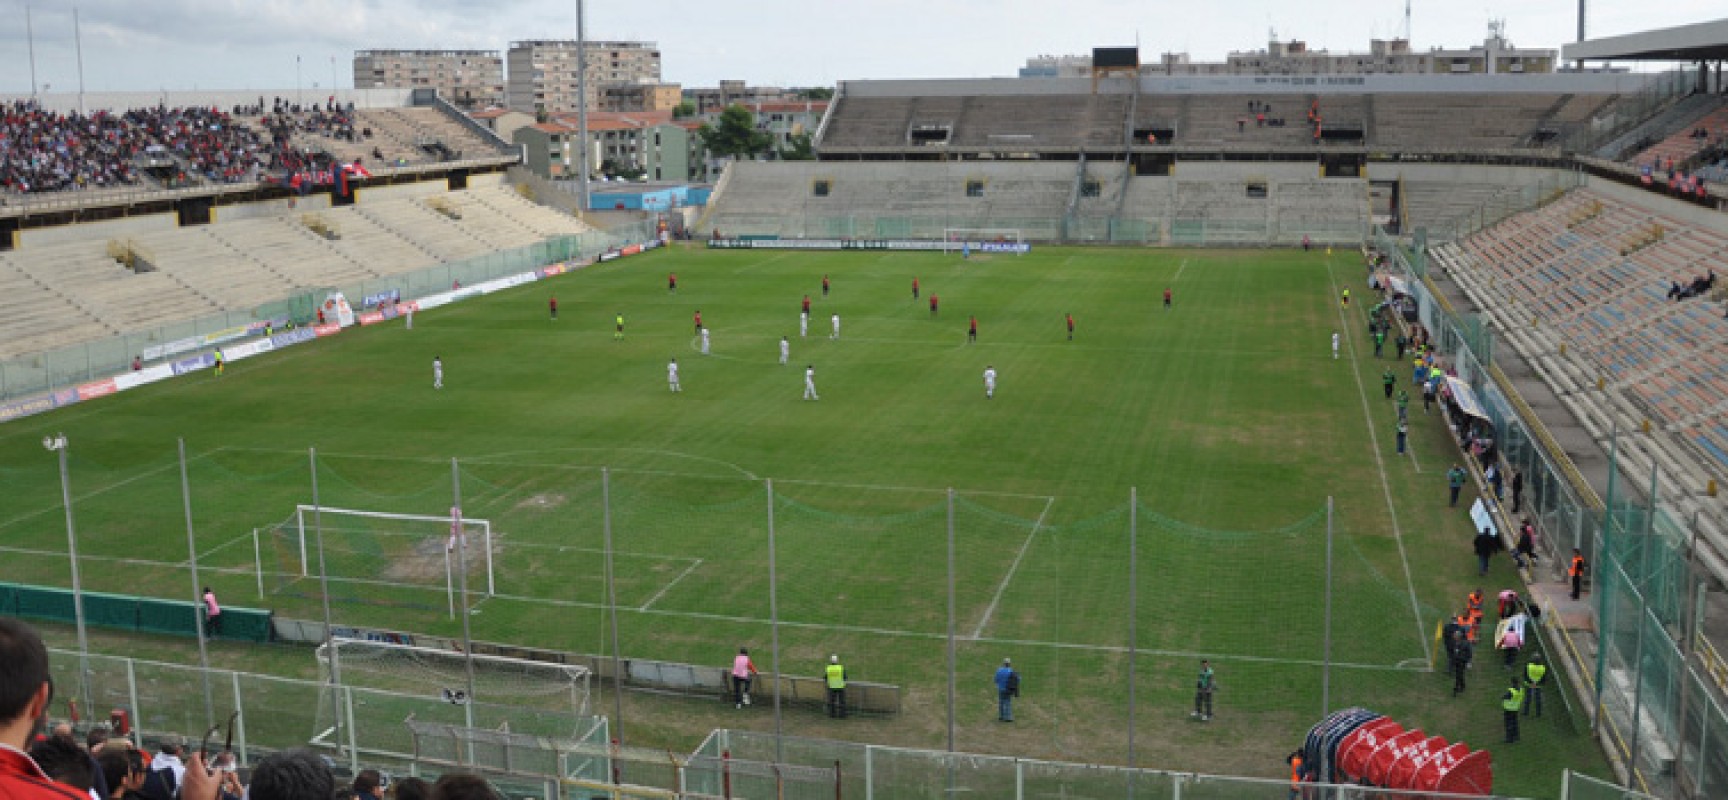 Taranto-Bisceglie, trasferta vietata ai tifosi neroazzurri